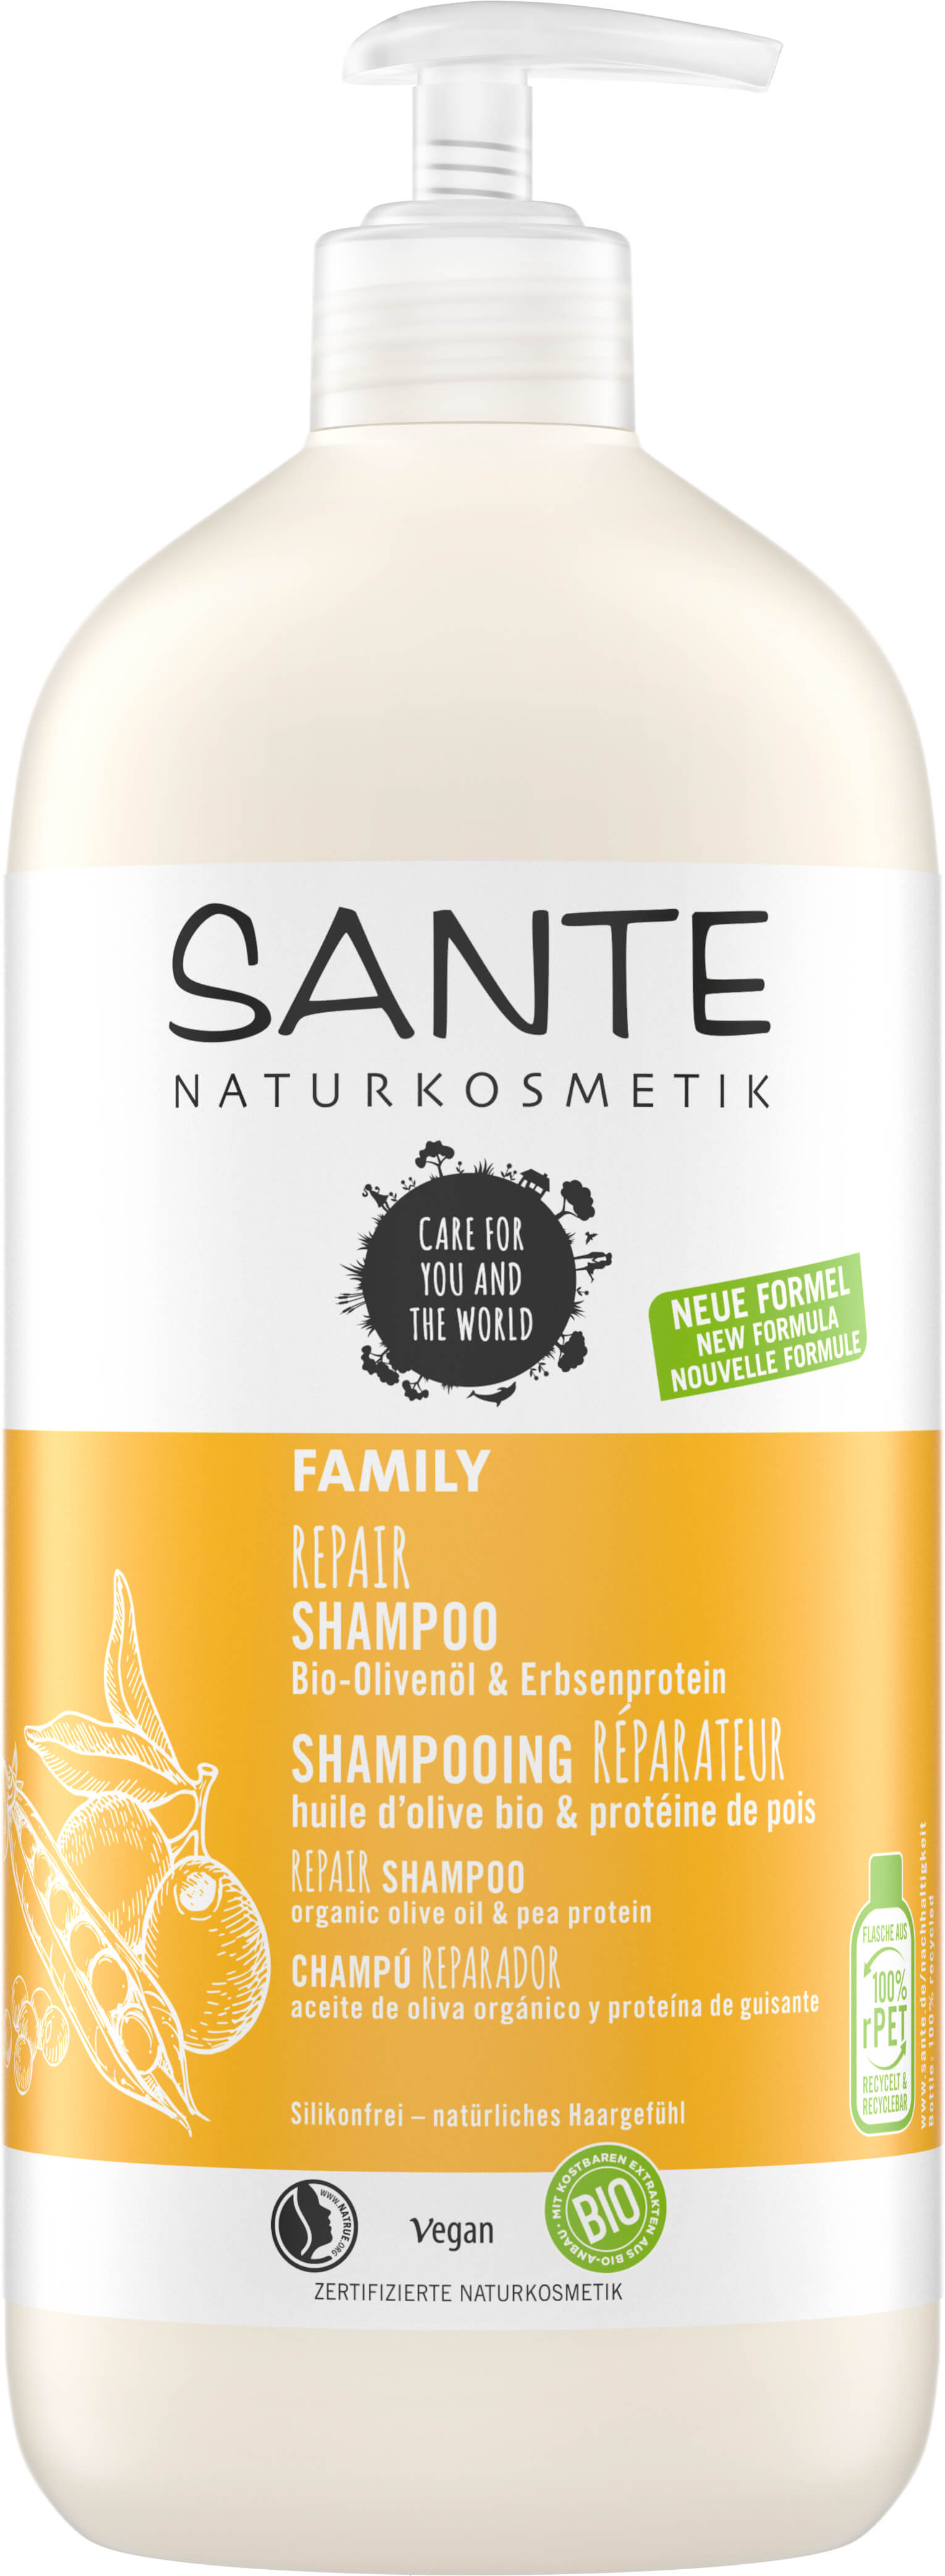 Shampoo SANTE Repair | & Bio-Olivenöl Erbsenprotein Naturkosmetik